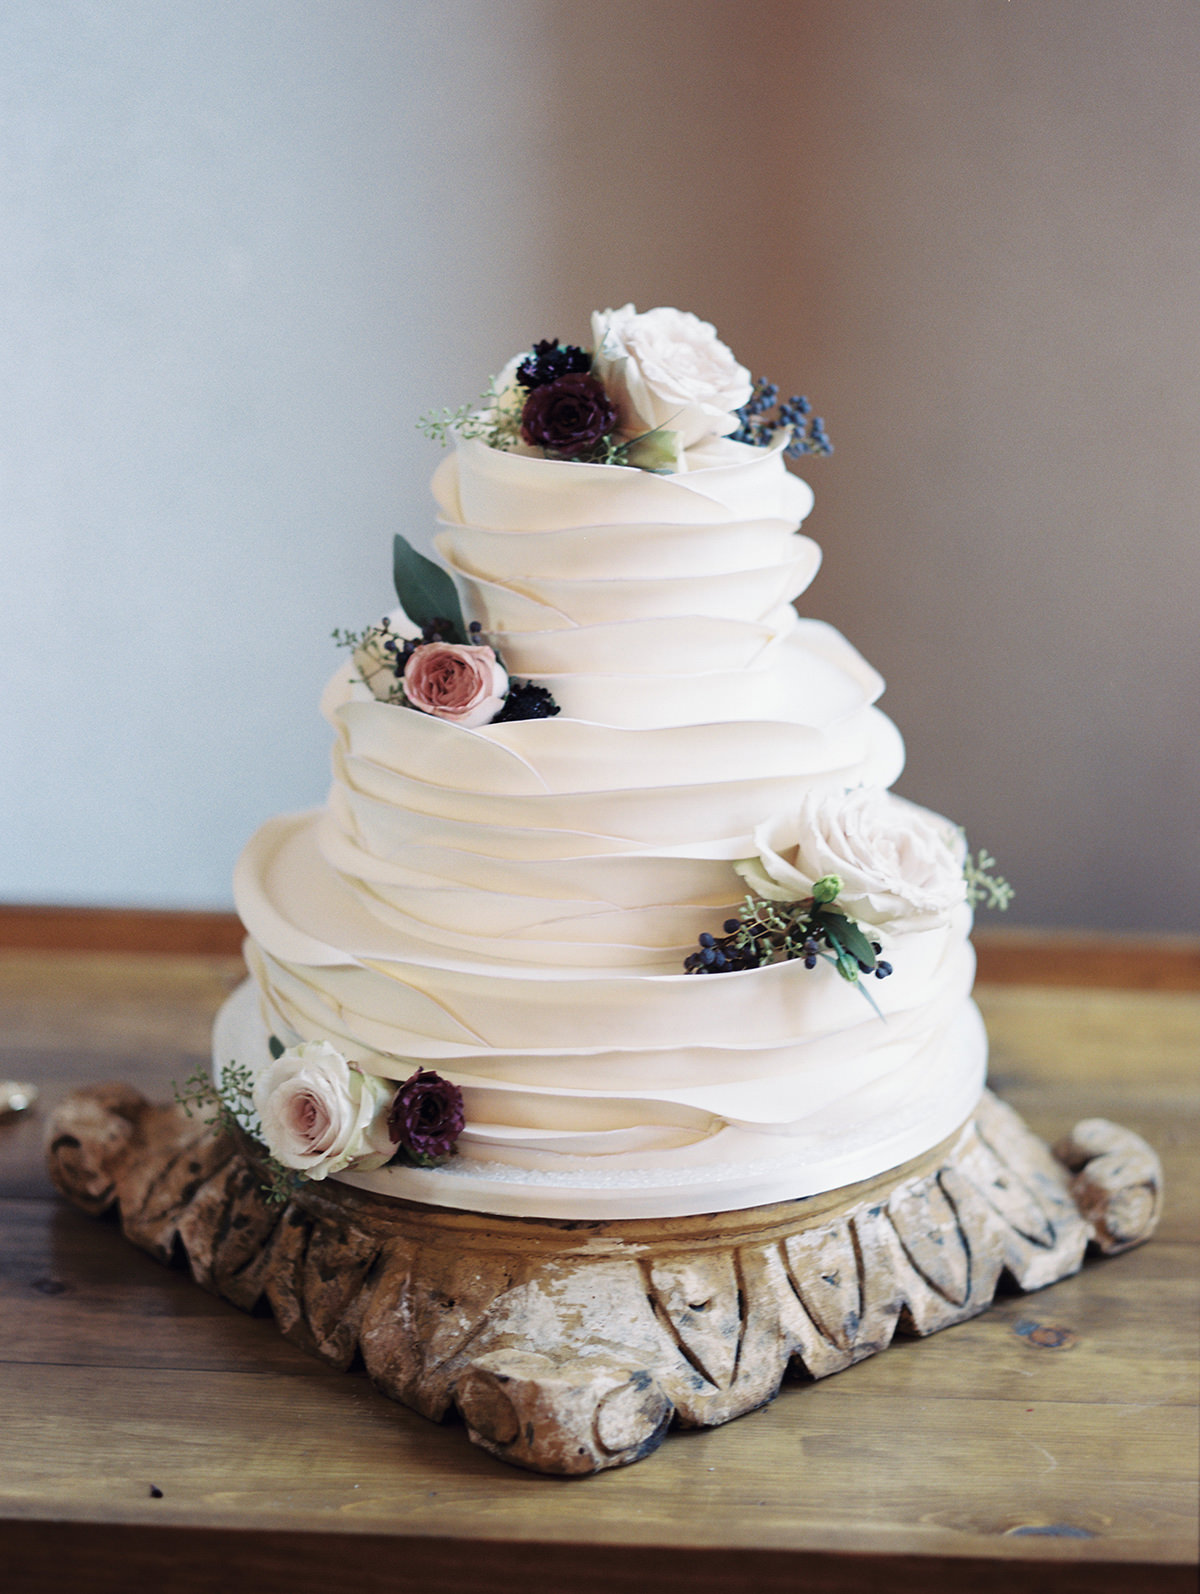 Executing Simple Wedding Cake Designs | Bakemag.com | August 15, 2017 13:33  | Bake Magazine